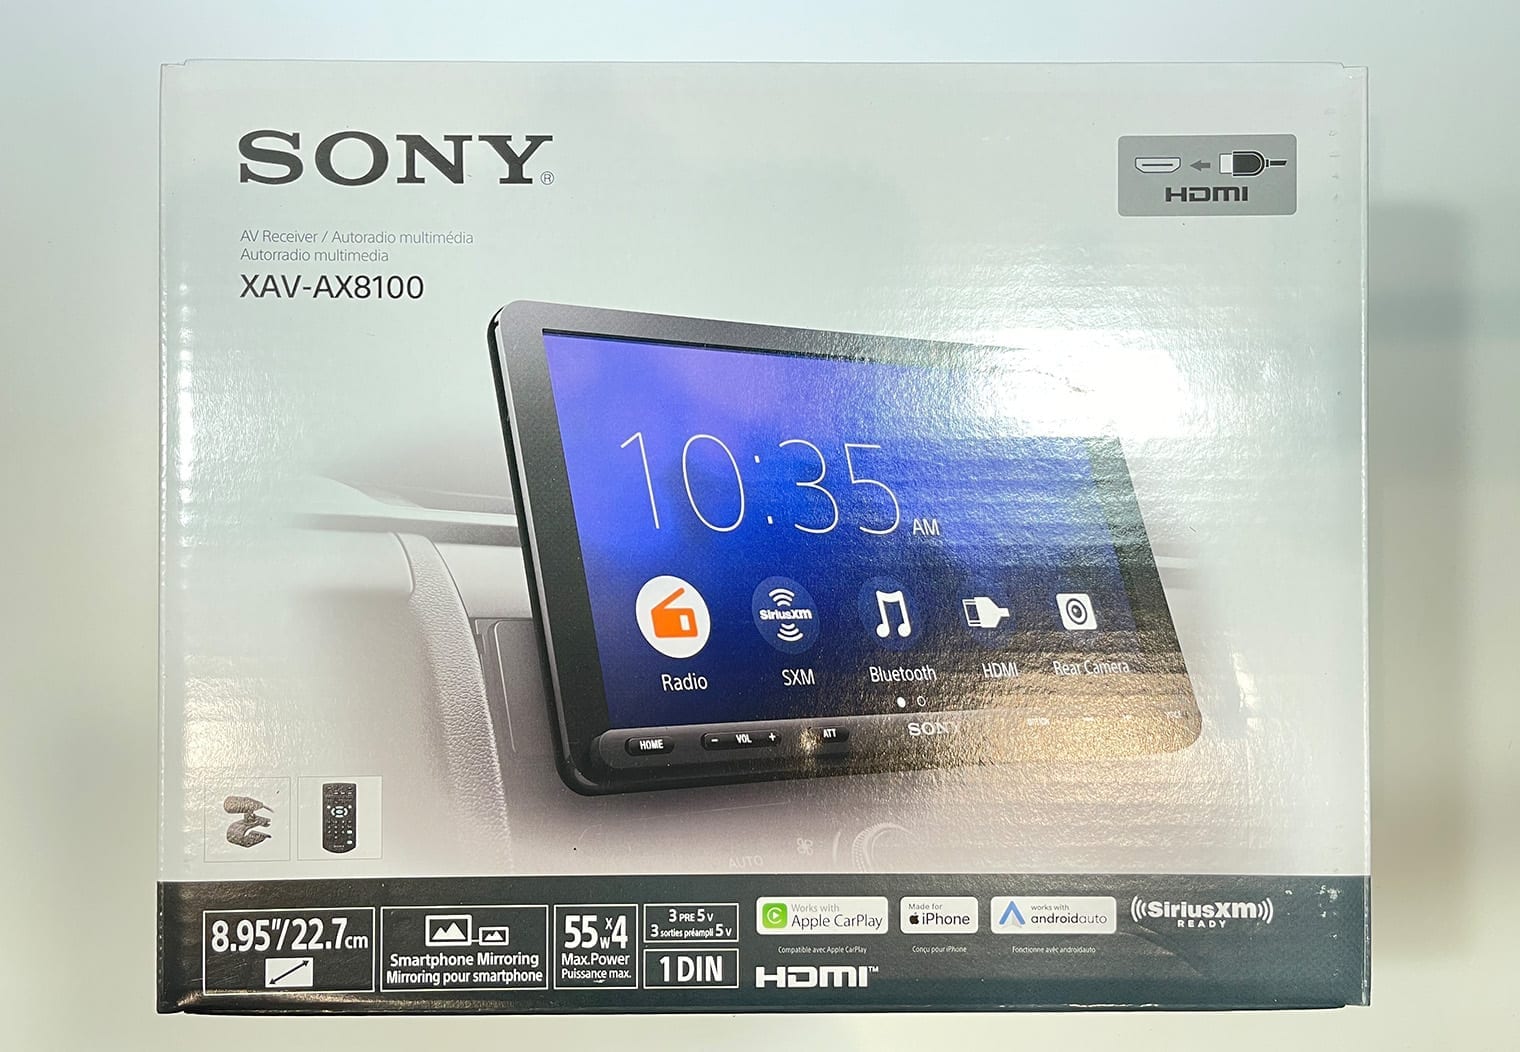 Sony XAV-AX8100 in box top view